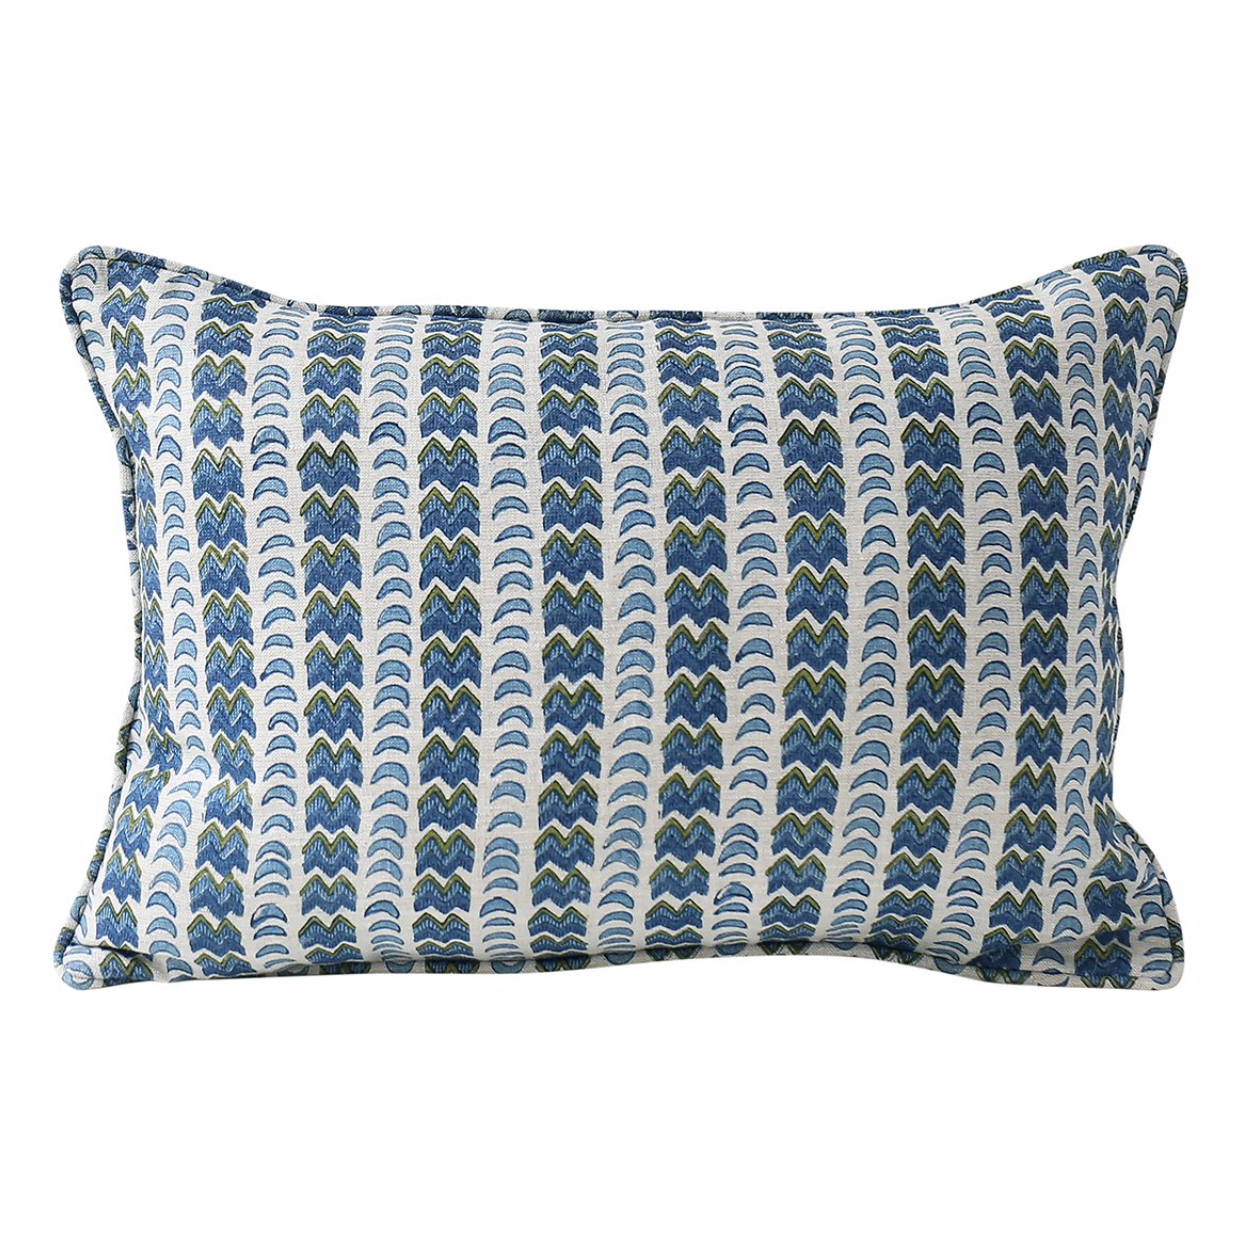 moss and blue zig zag pattern oblong pillow